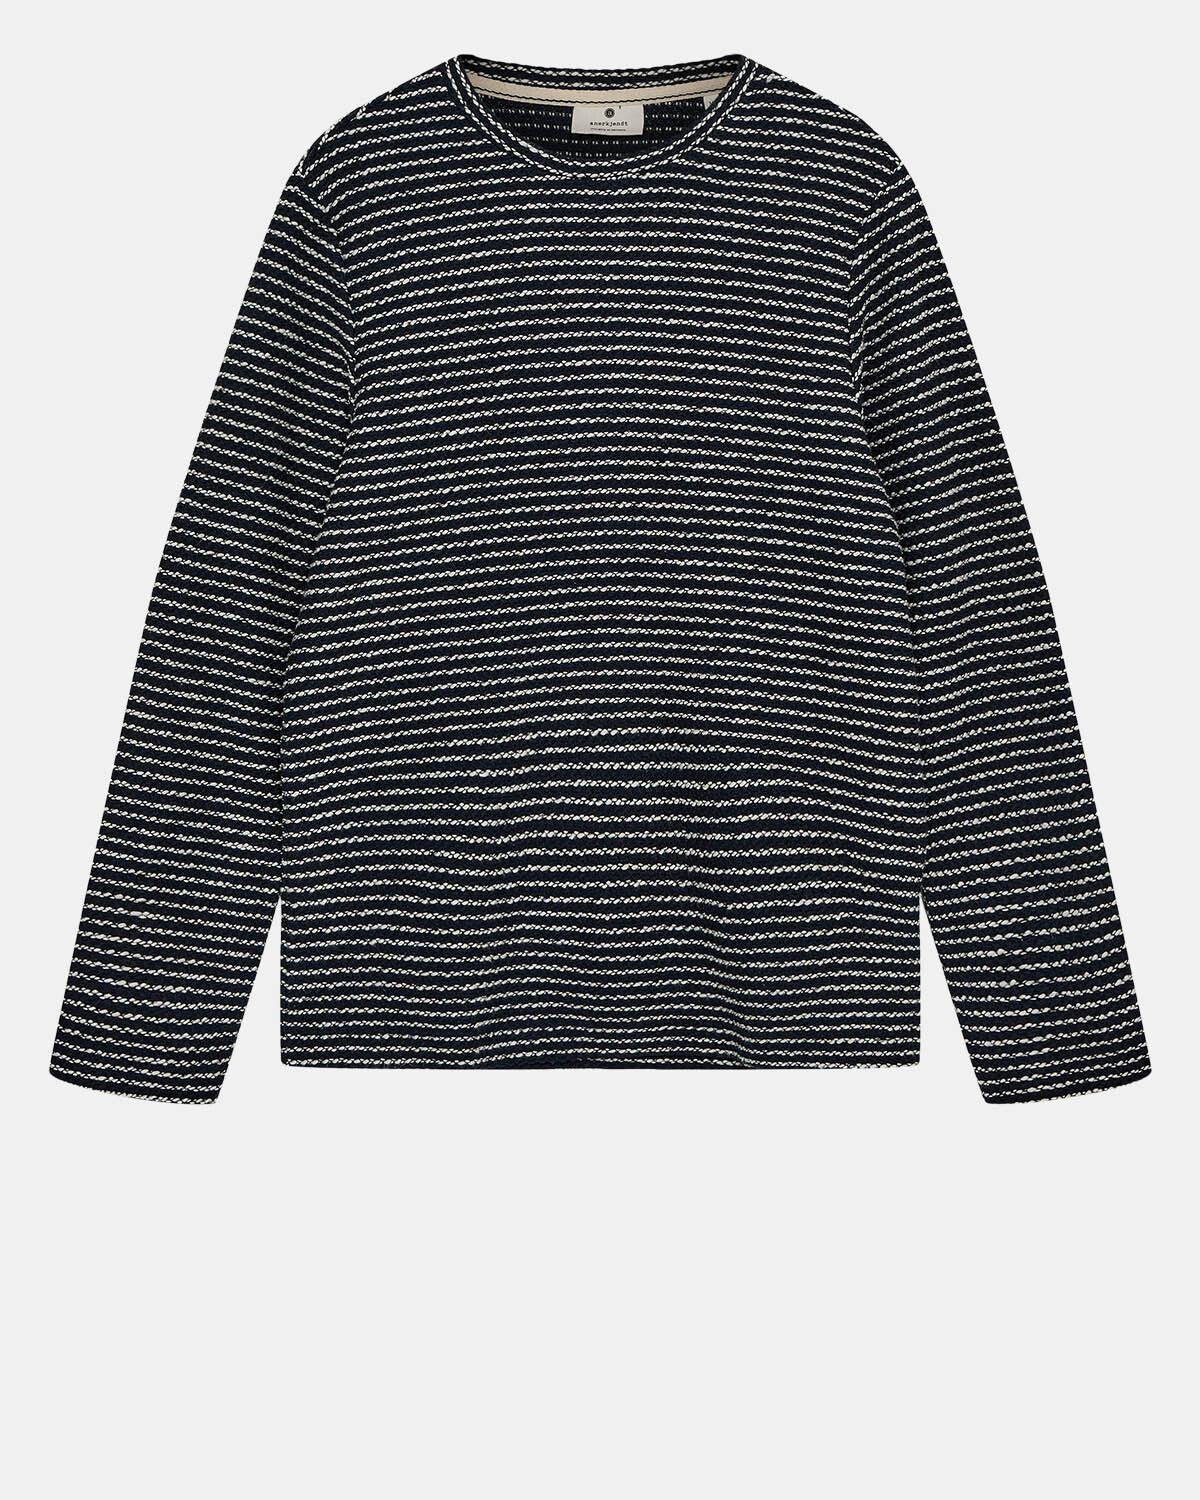 Sail stripe sweater sky captain - Anerkjendt